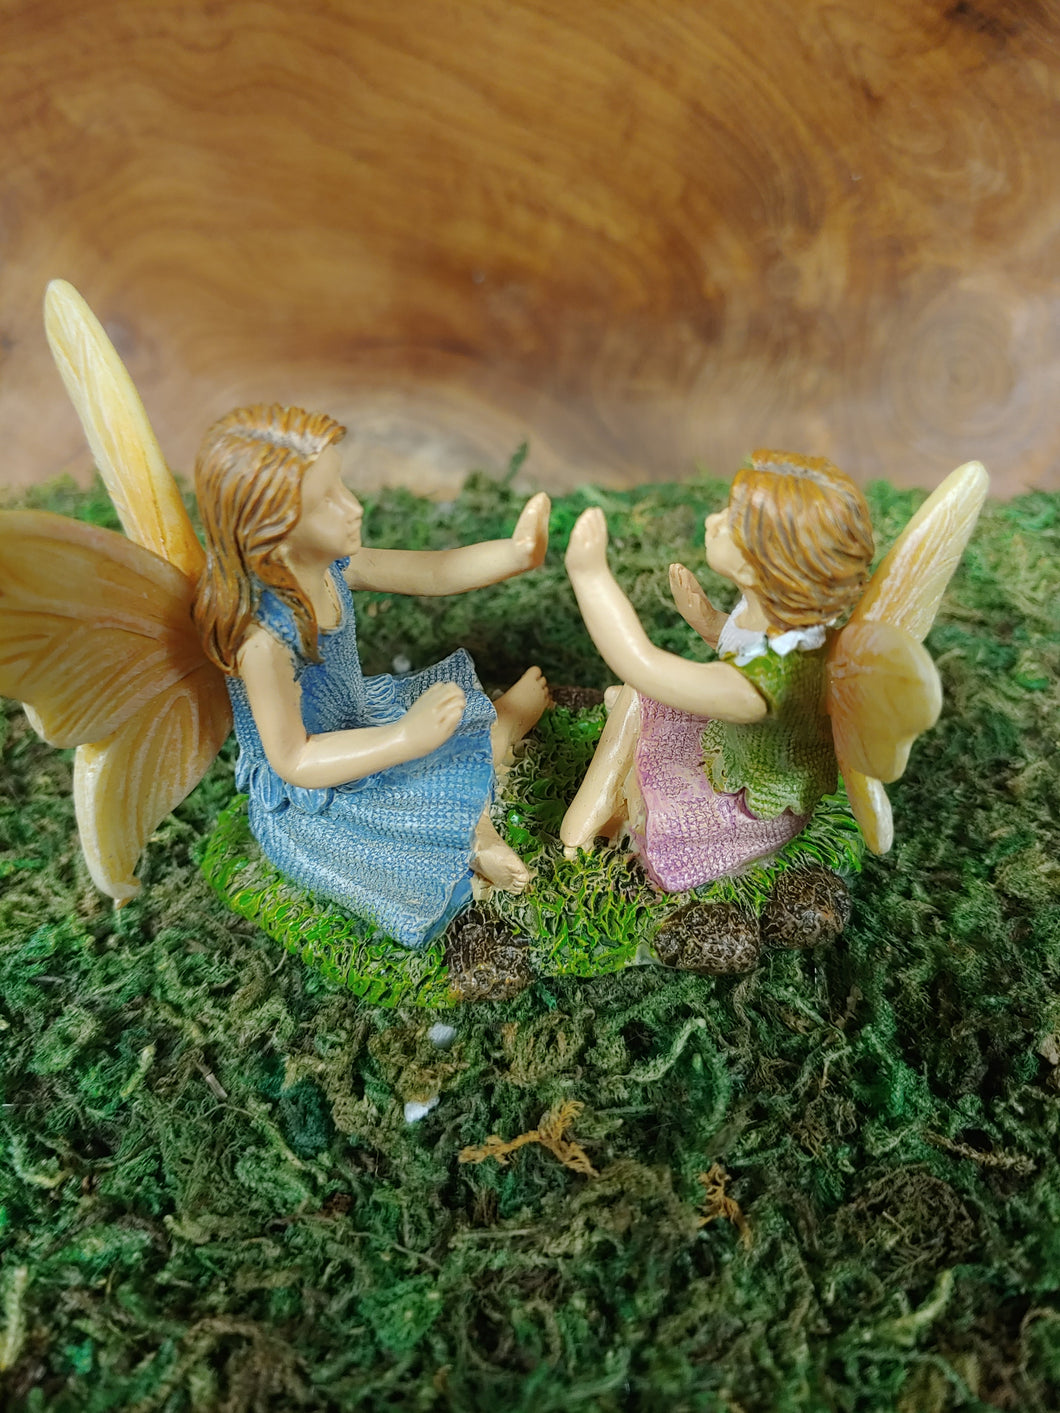 Friends Sister Girls Miniature Fairies Playing Pattycake while seated  - MG418